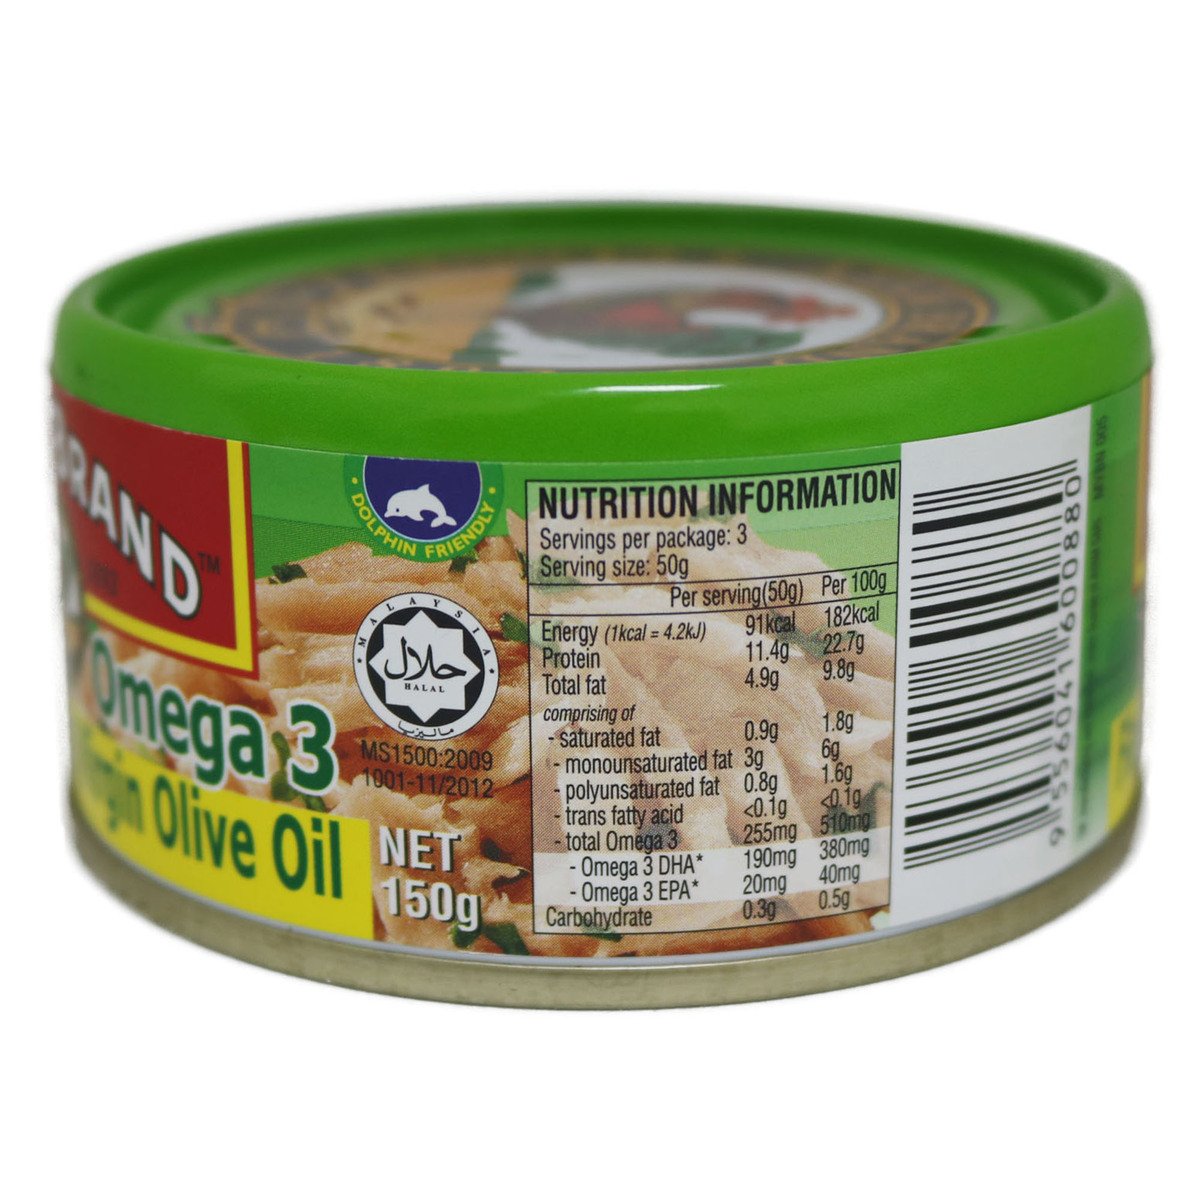 Ayam Brand Tuna Omega 3 In Olive Oil 150g